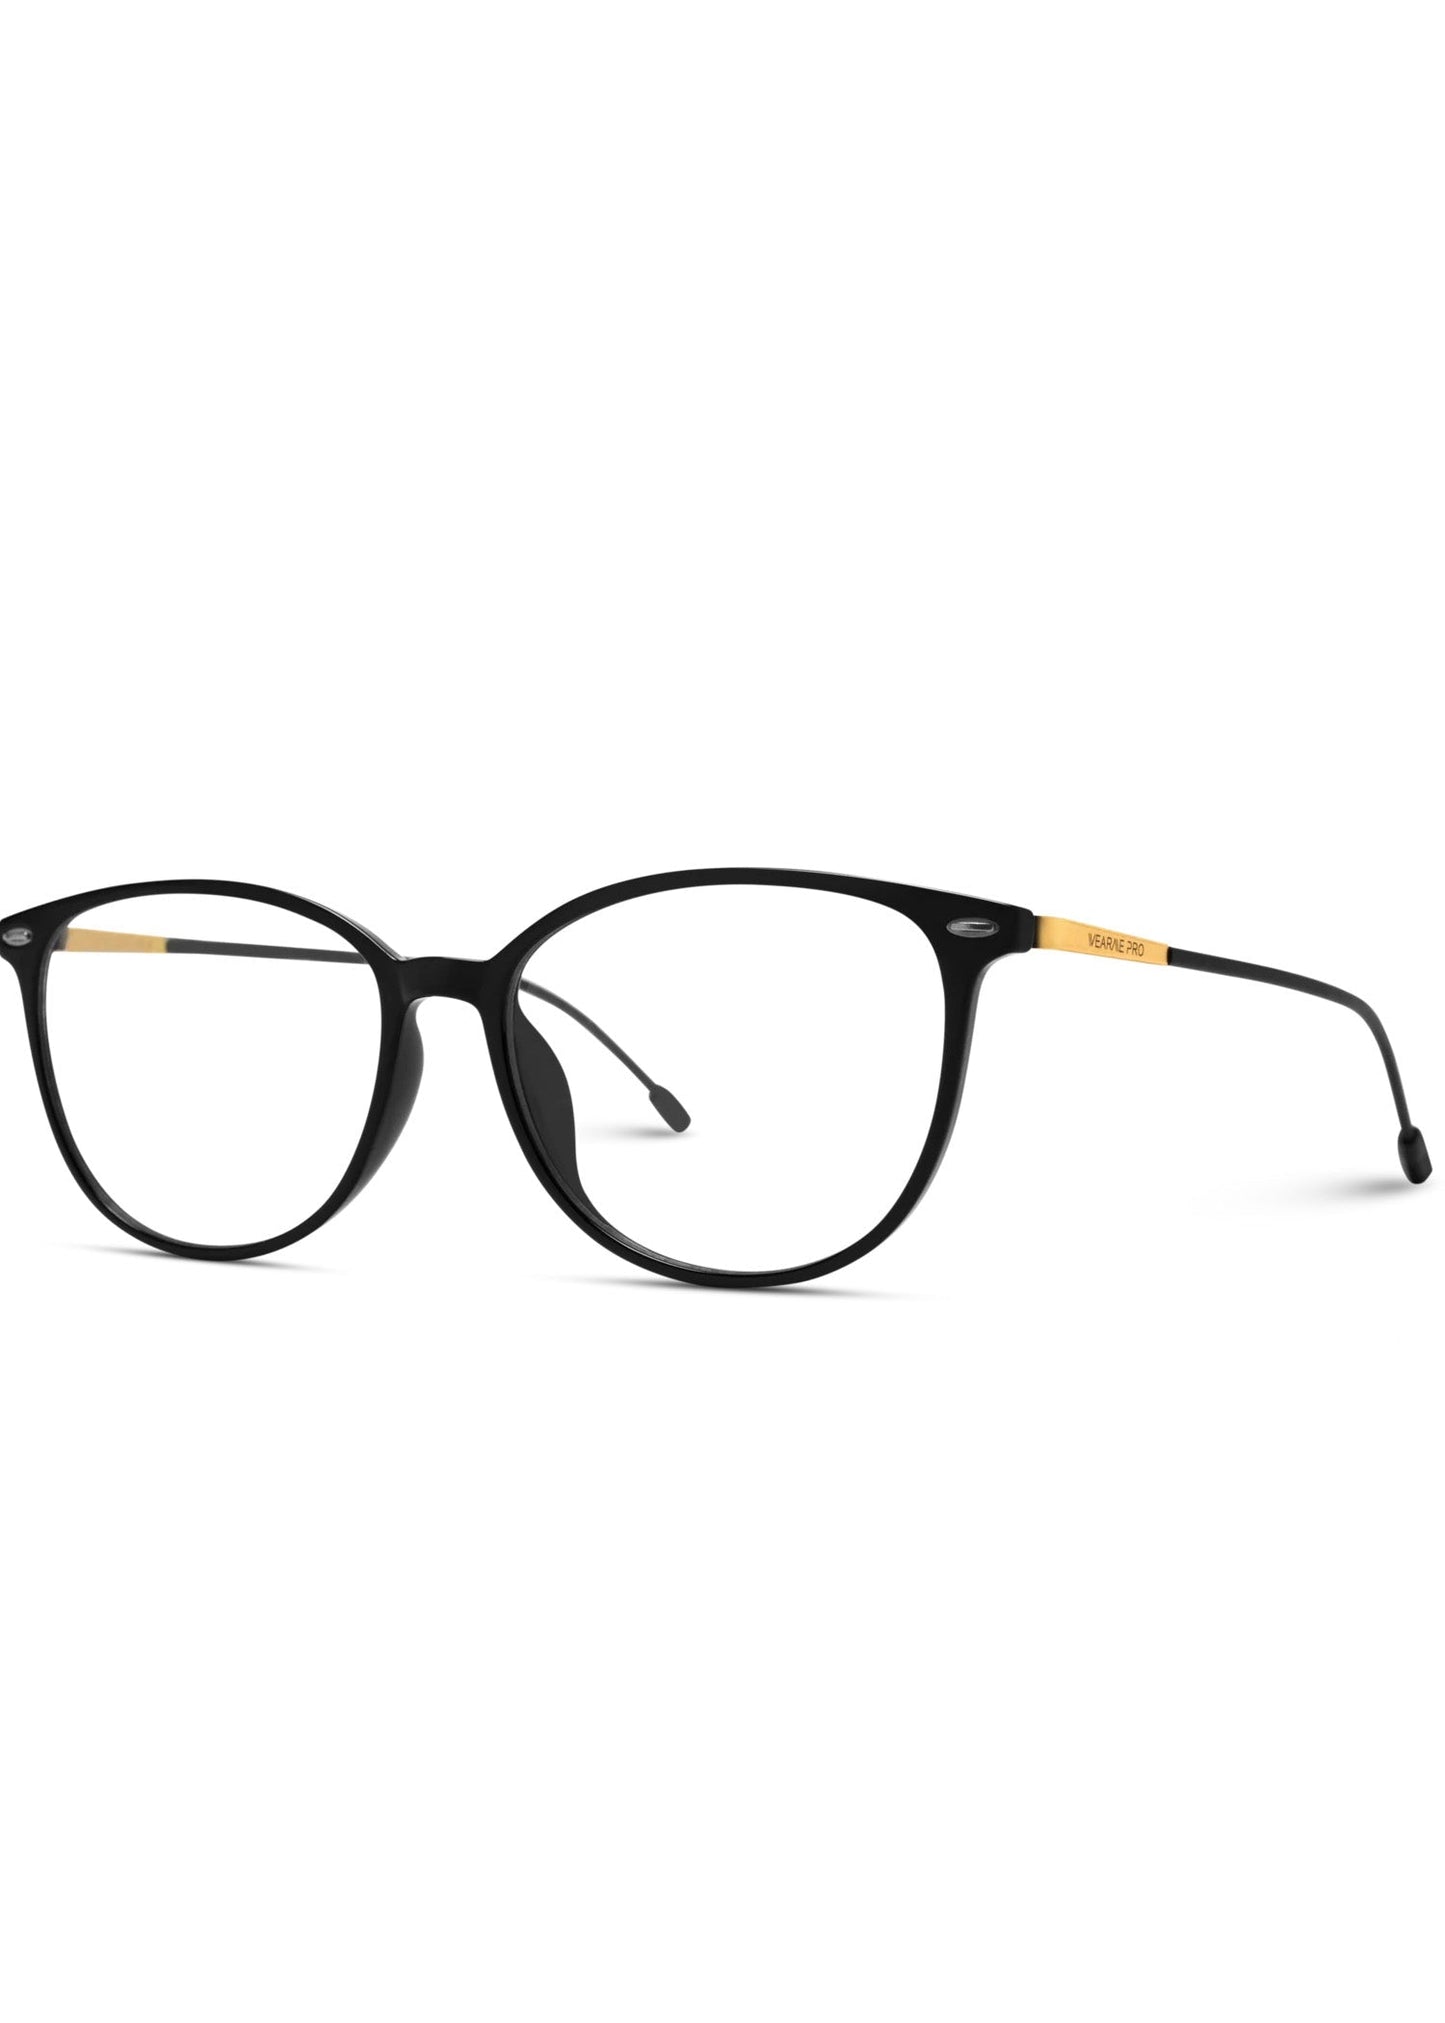 Black Frame Blue Light Glasses - FINAL SALE Accessories